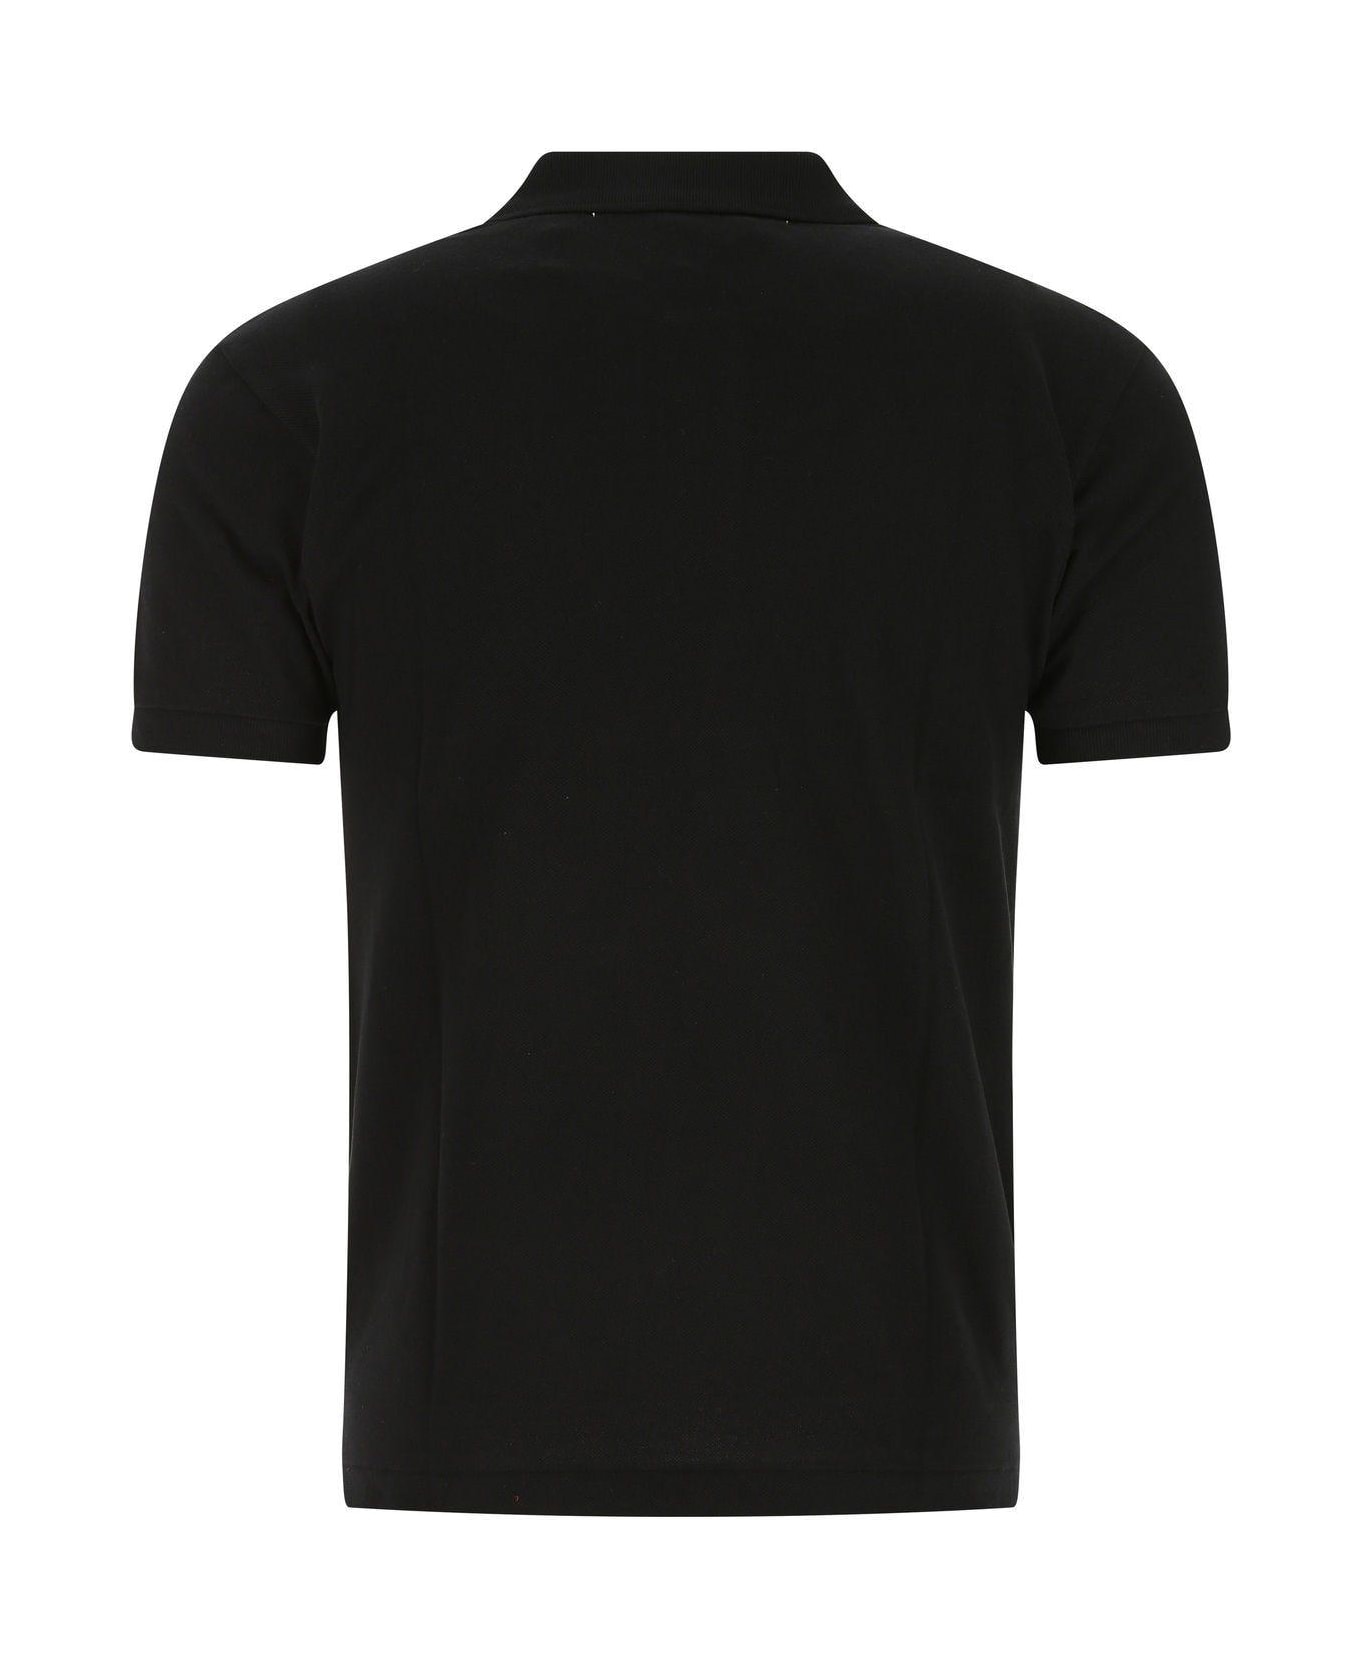 Comme des Garçons Play Black Piquet Polo Shirt - Black